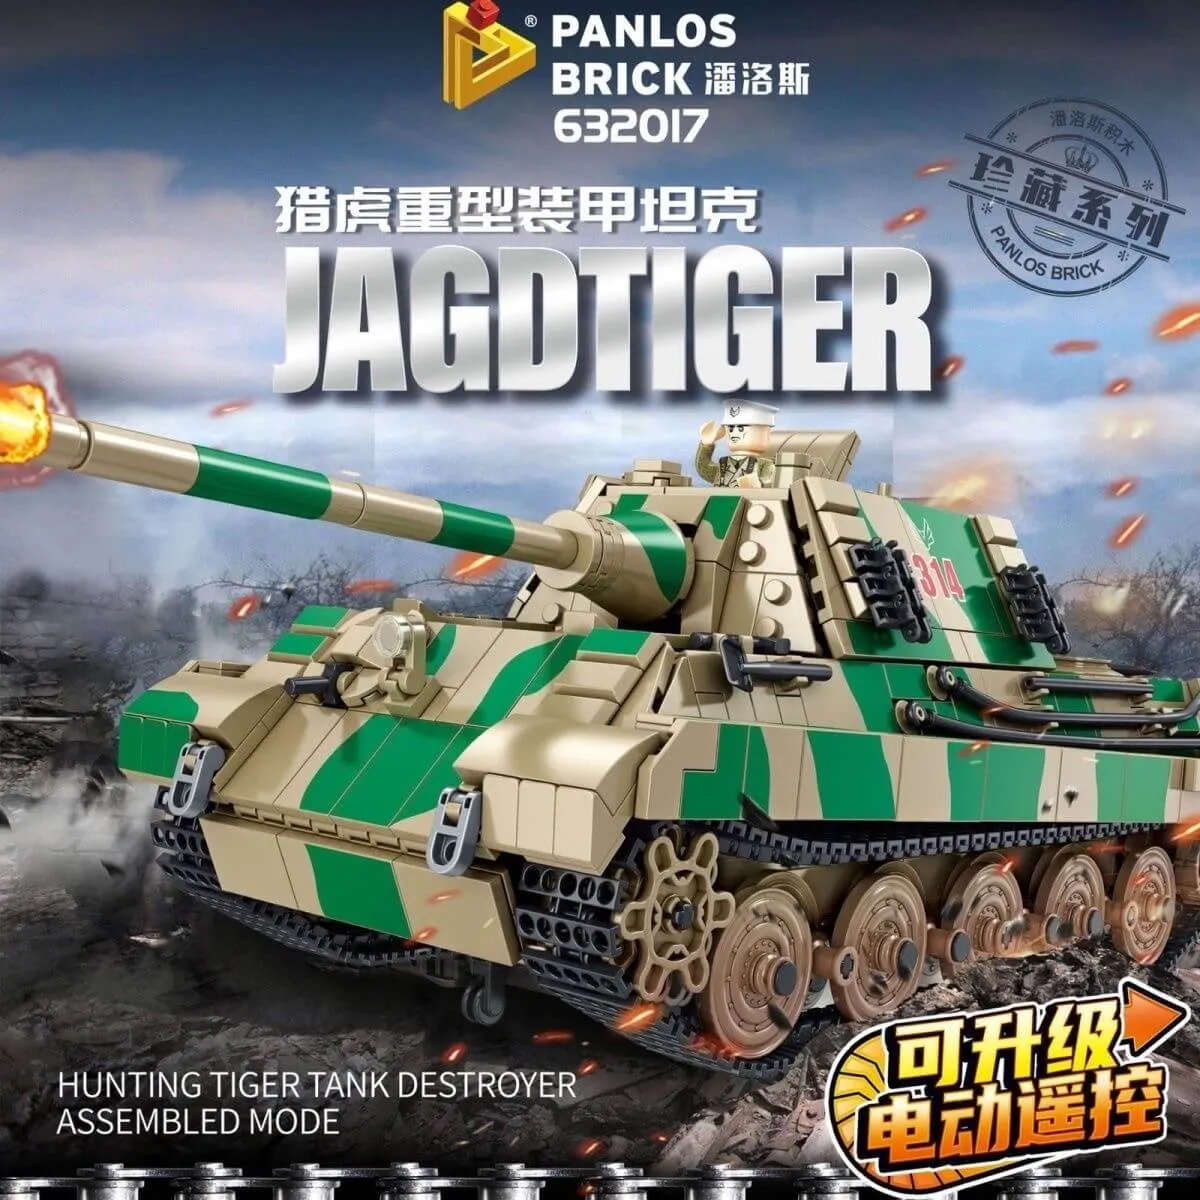 Jagdtiger Jagdpanzer Gallery